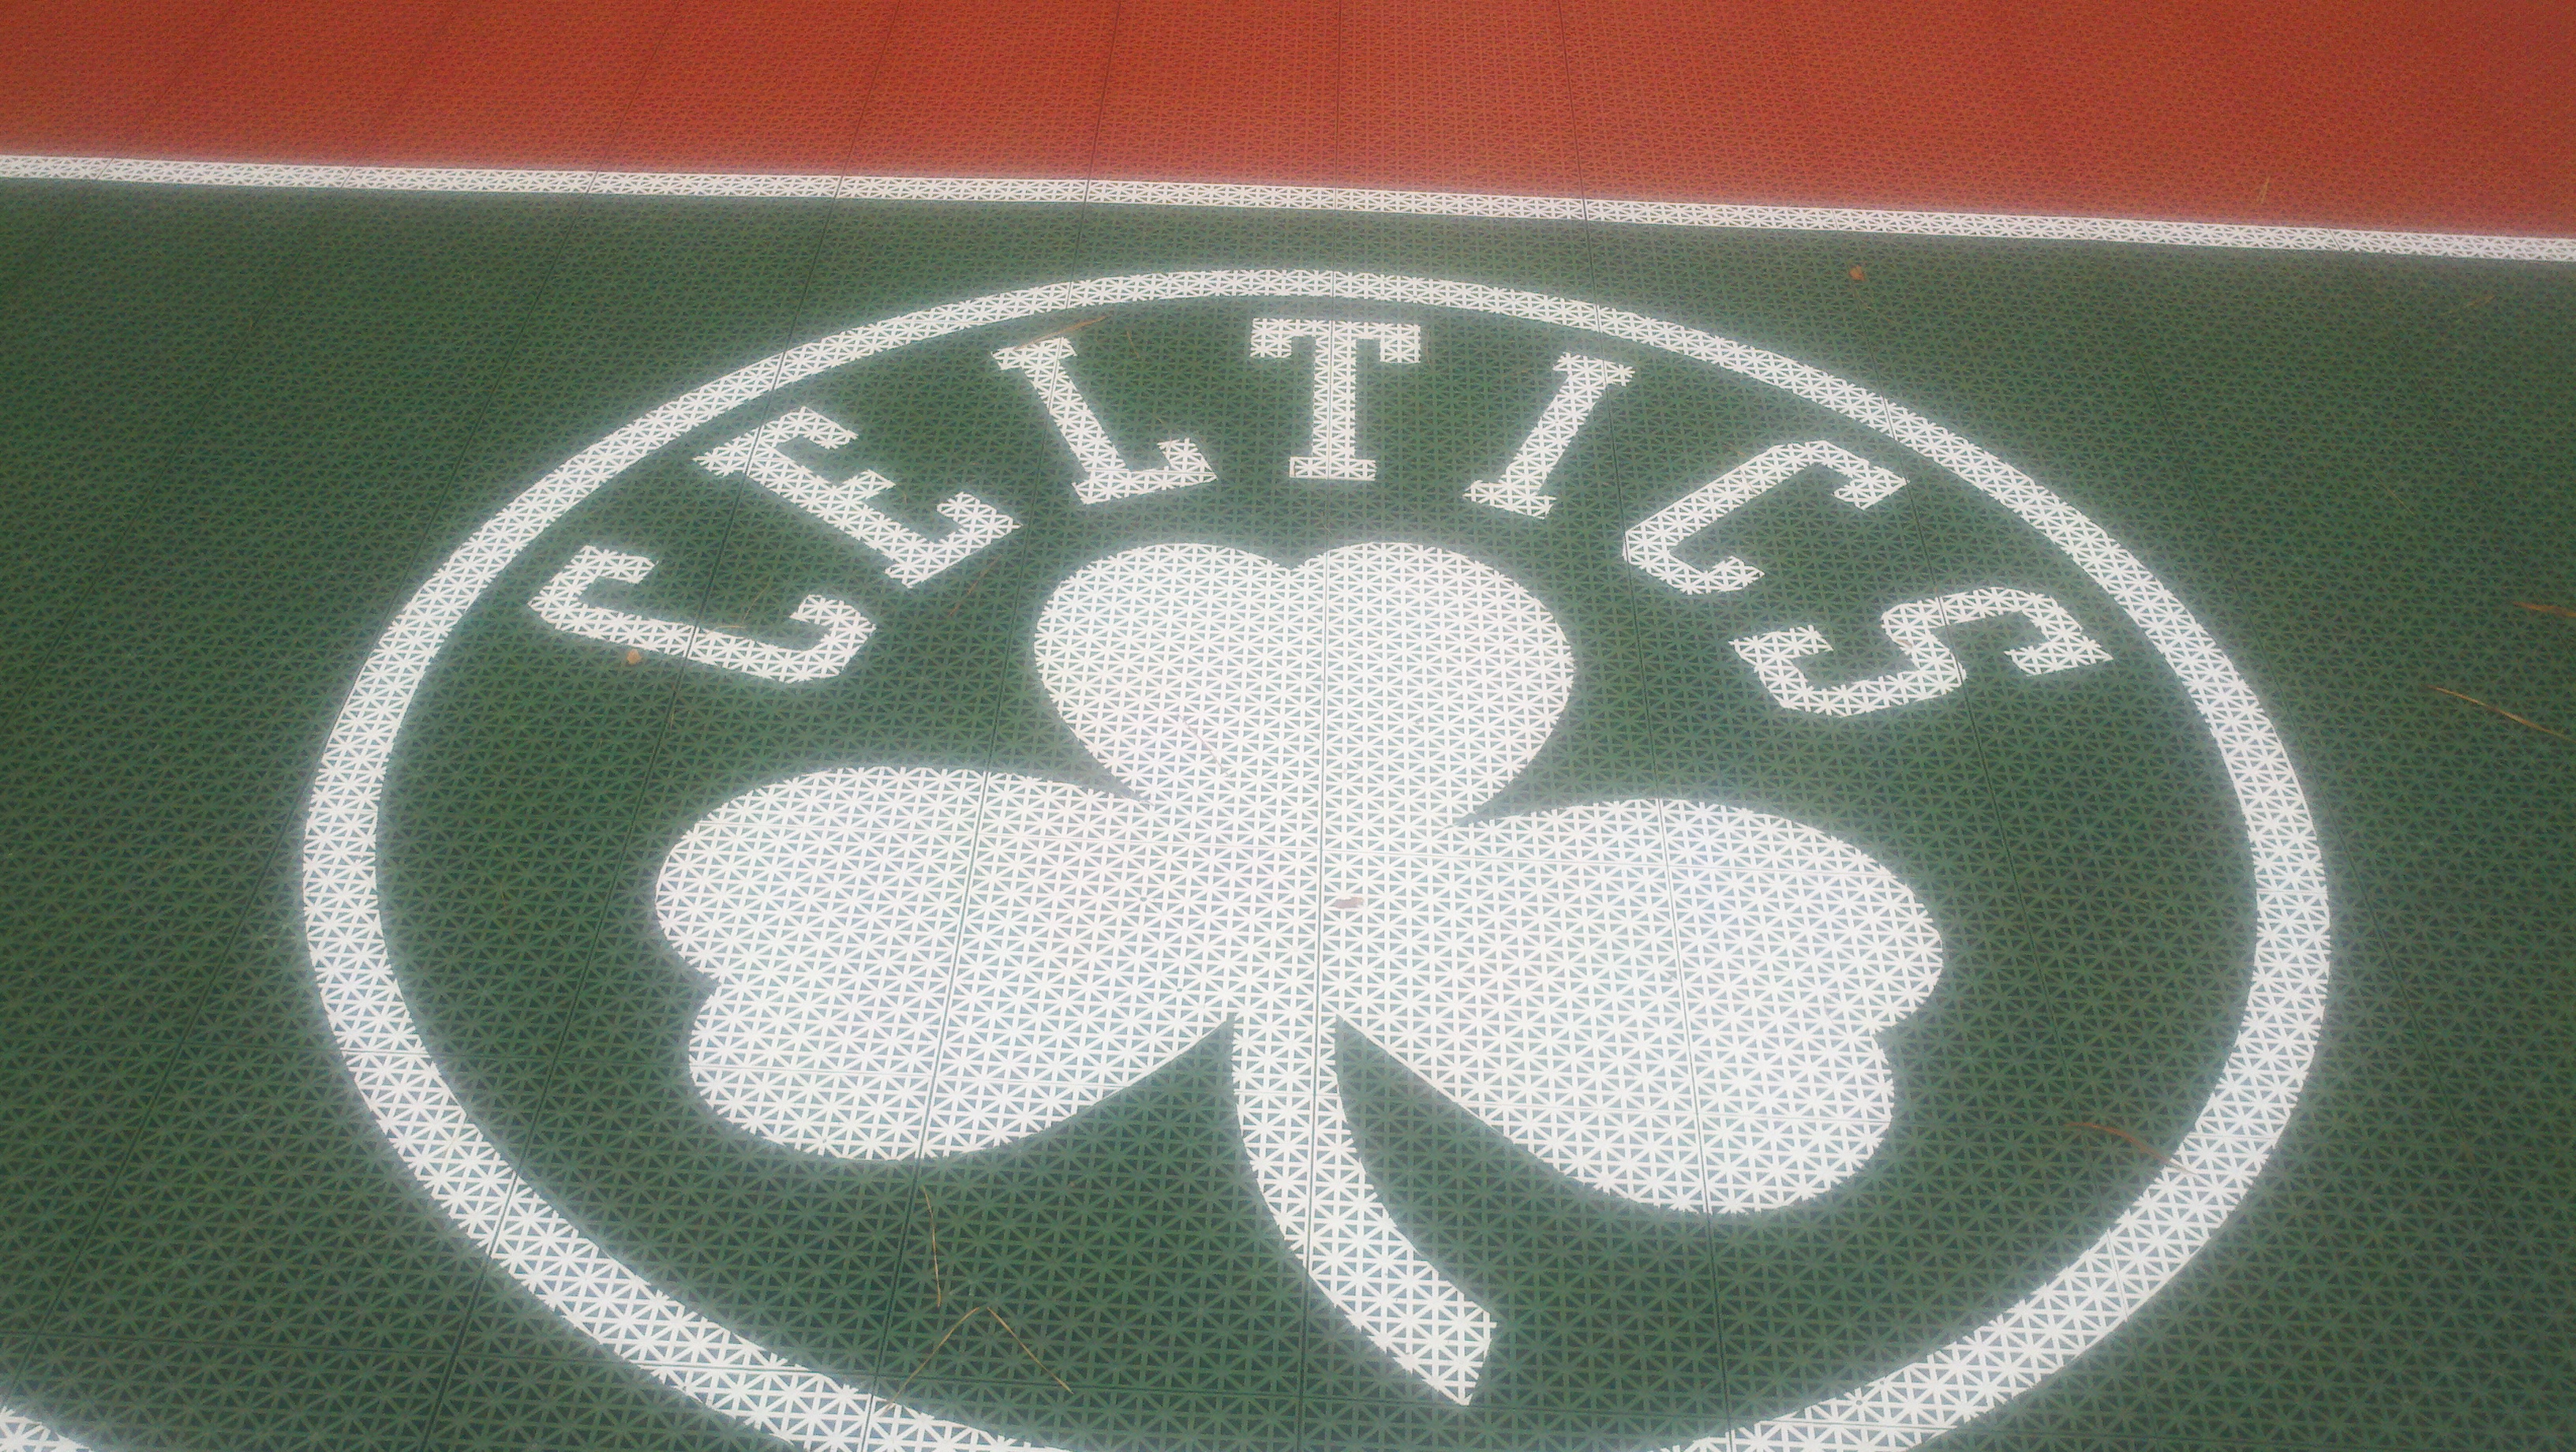 The painted Boston Celtics logo looks sharp on Burce's court surfacing.